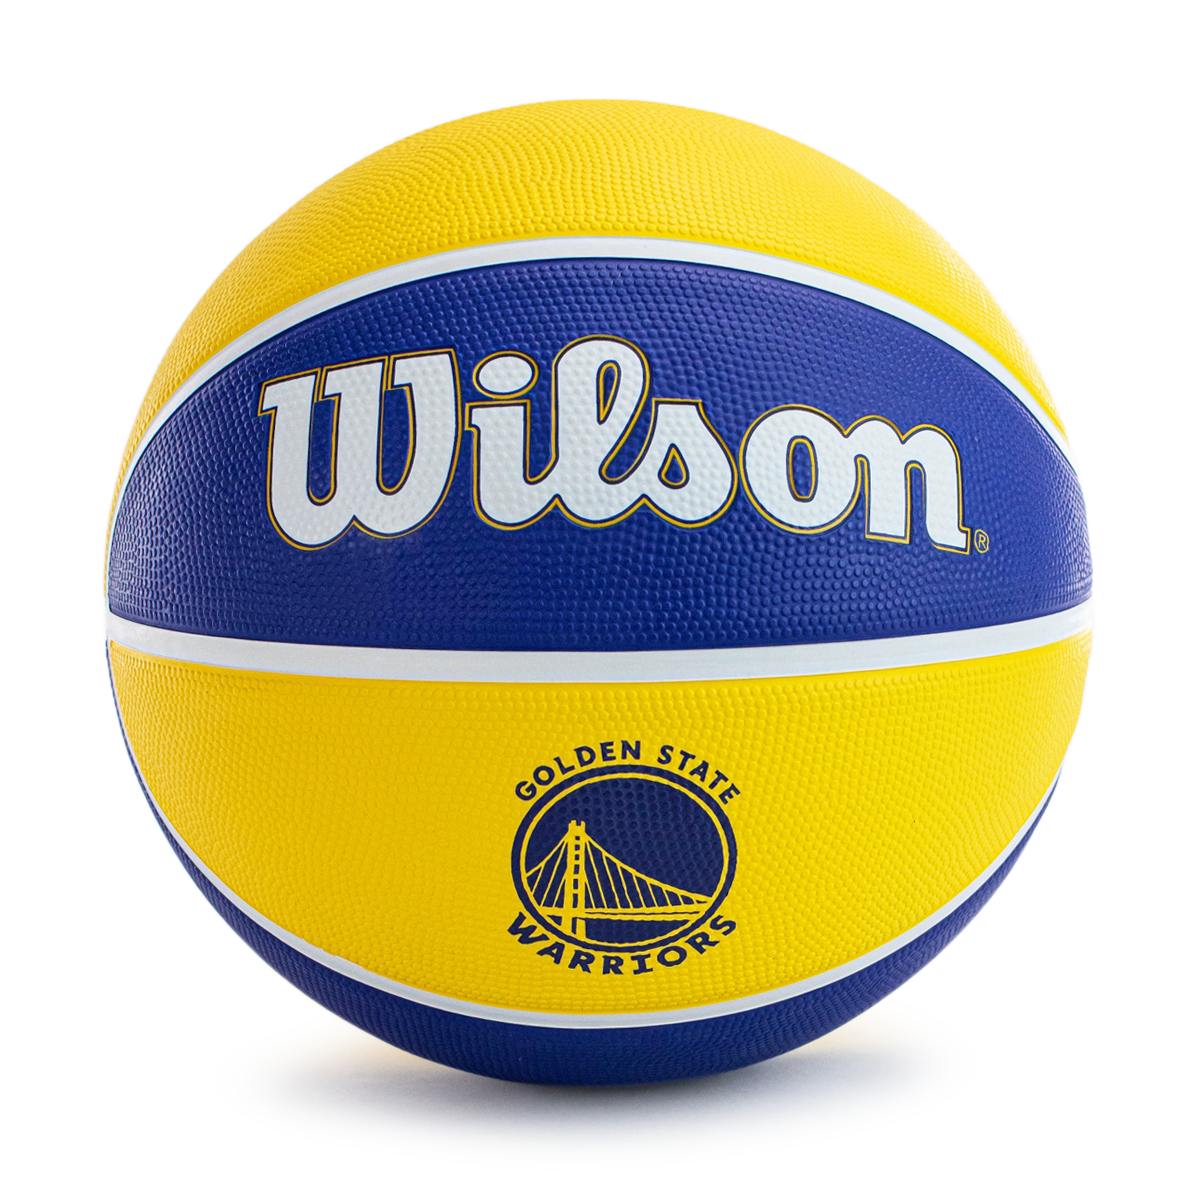 Wilson Golden State Warriors NBA Team Tribute Basketball Größe 7 WTB1300XBGOL-